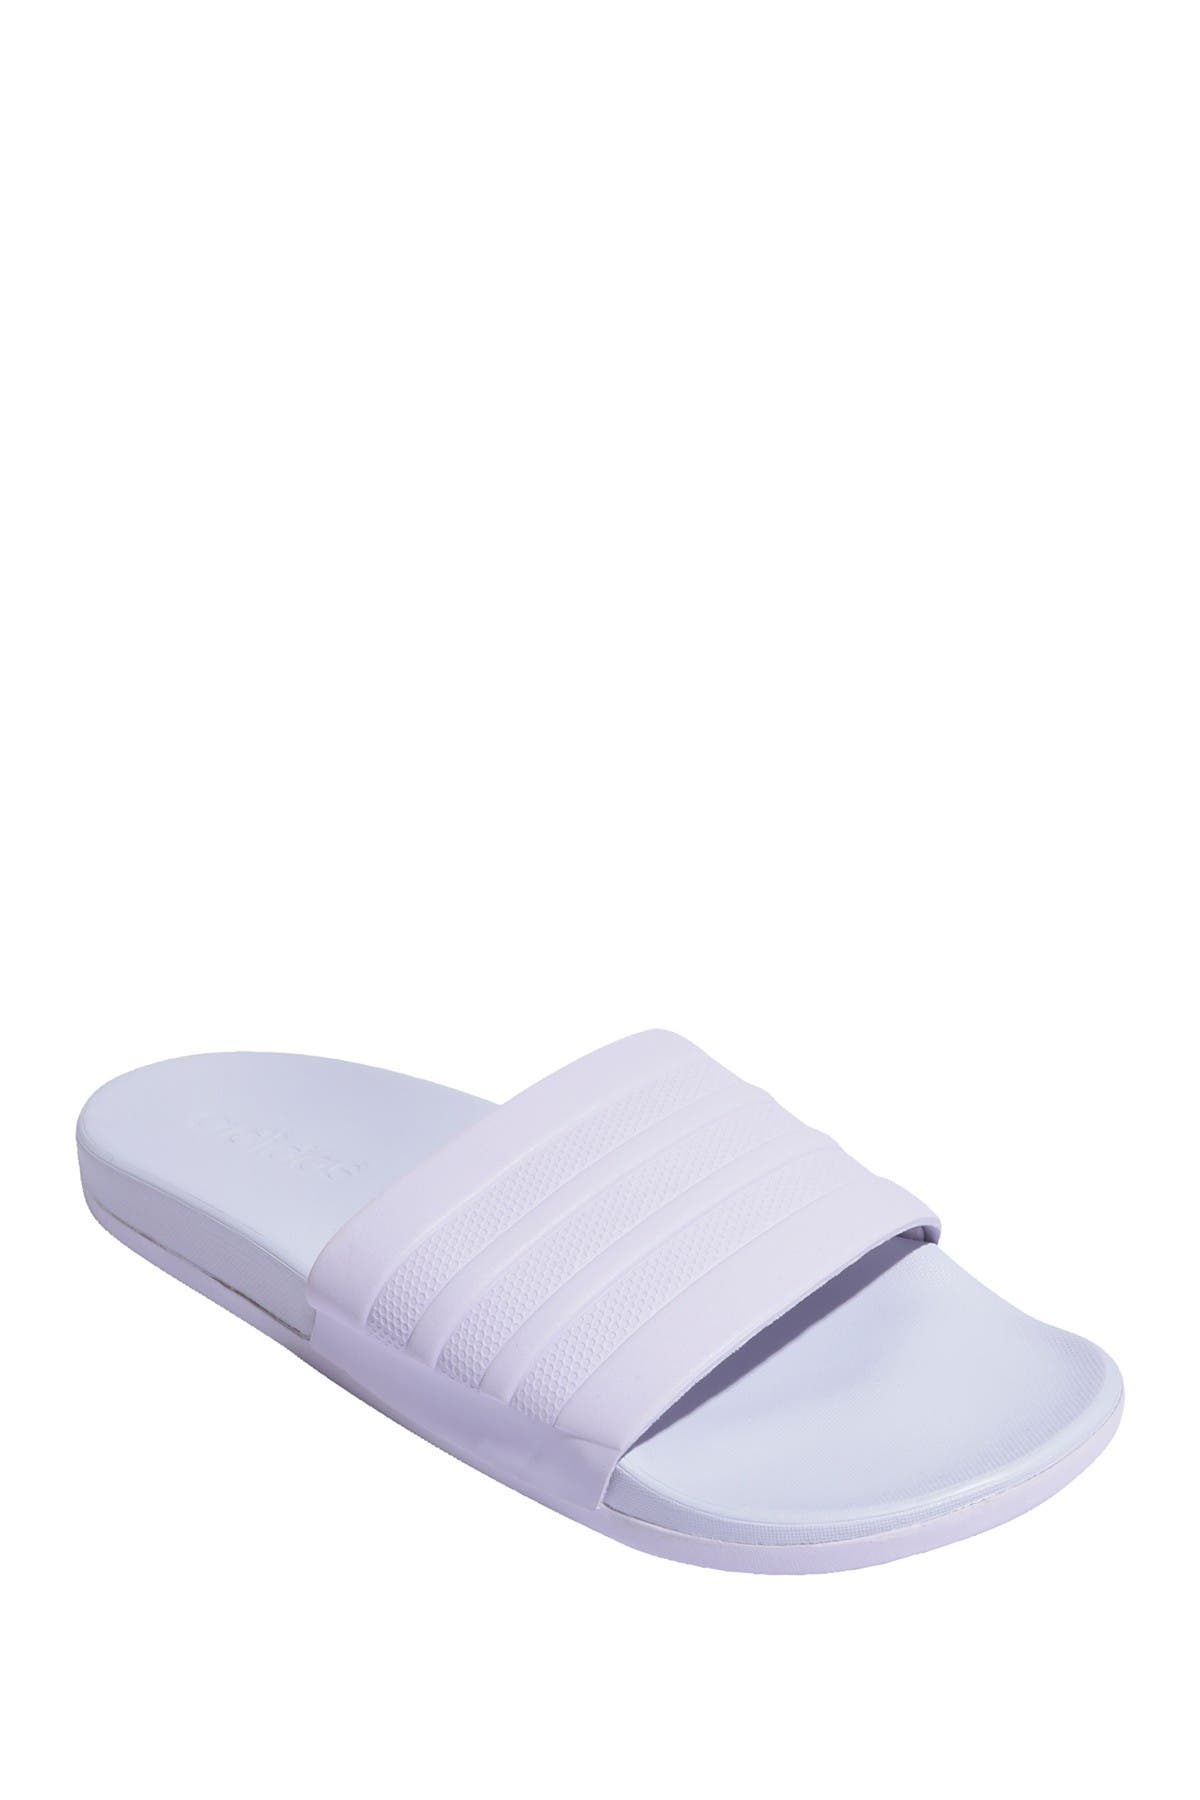 adidas comfort slides white